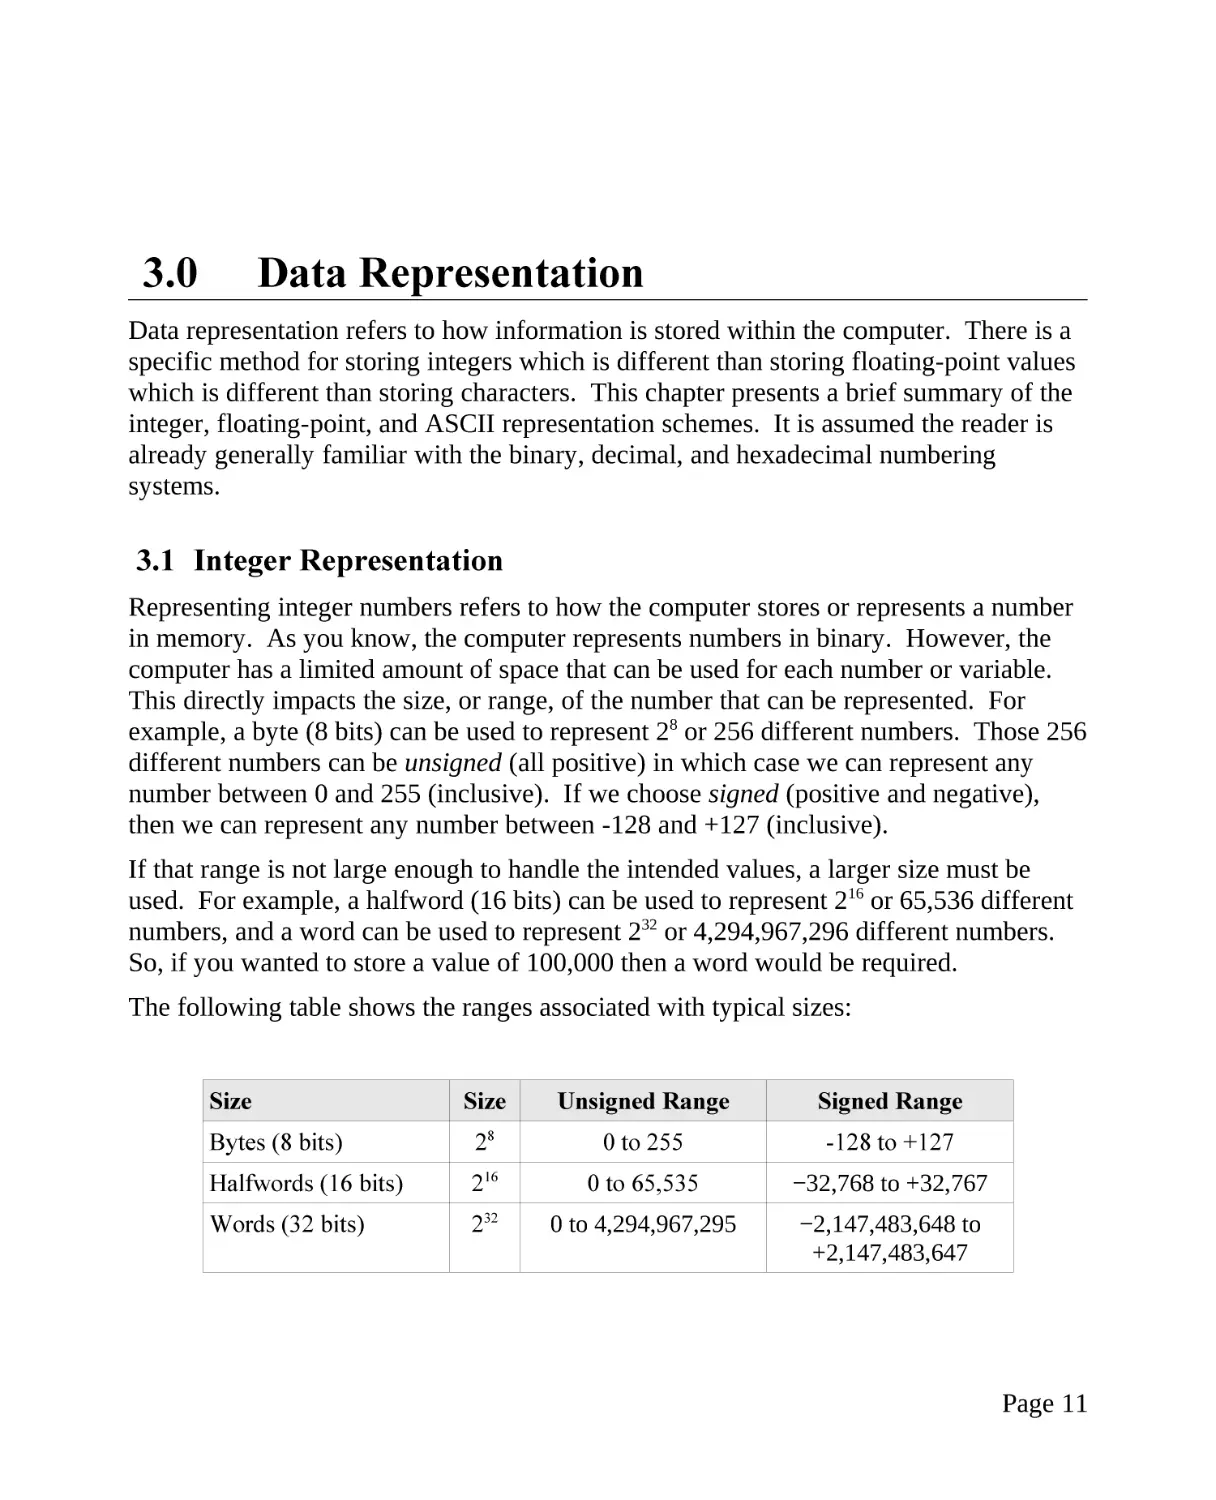 3.0 Data Representation
3.1 Integer Representation